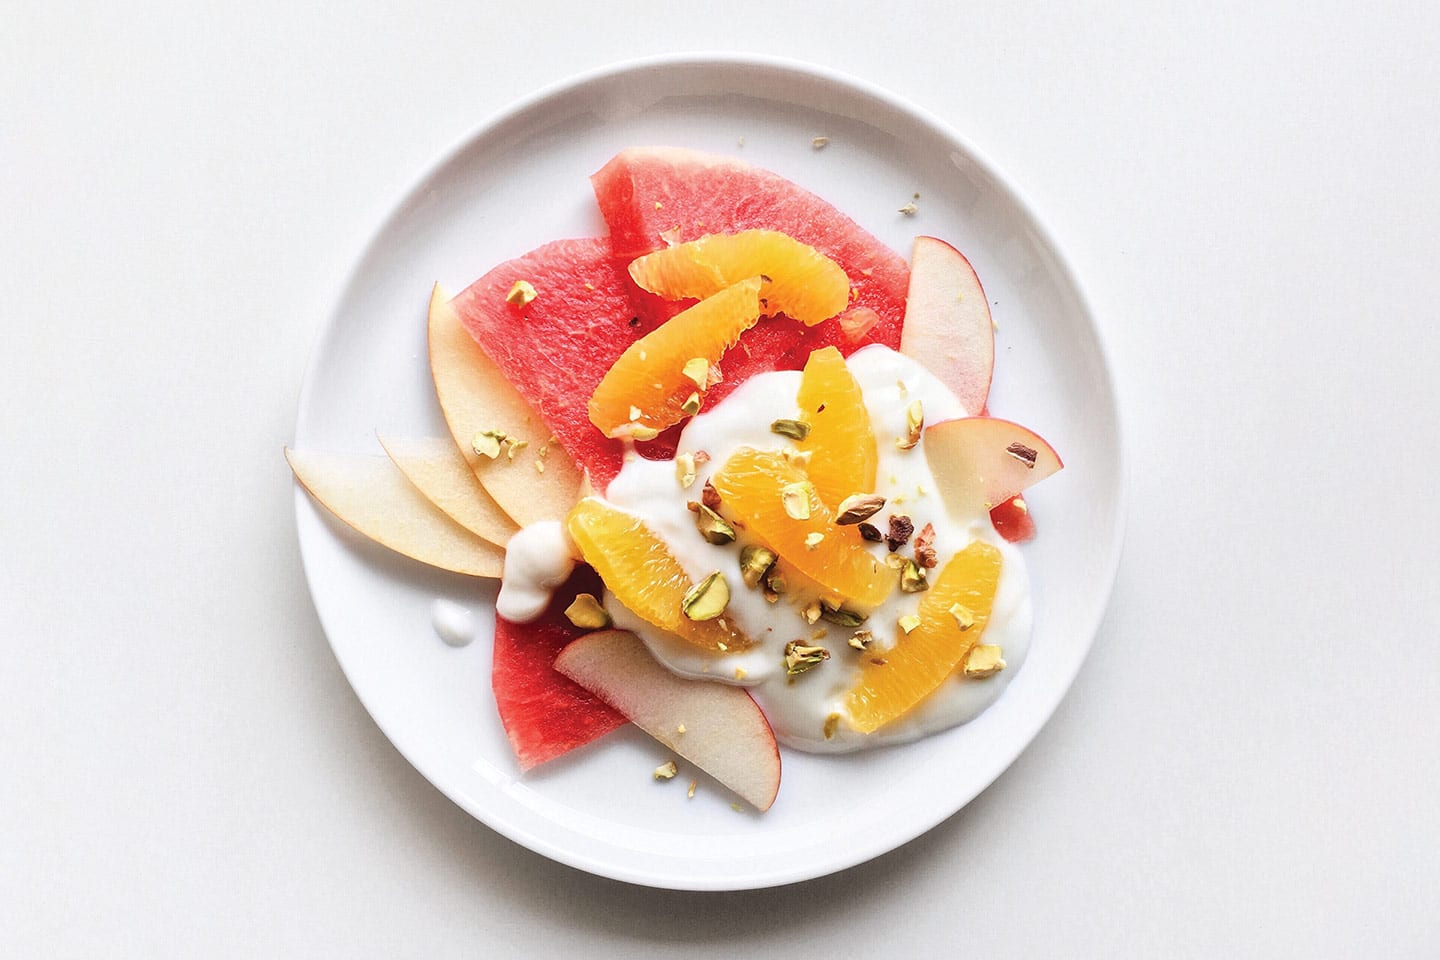 healthy fruit and yogurt on a plate